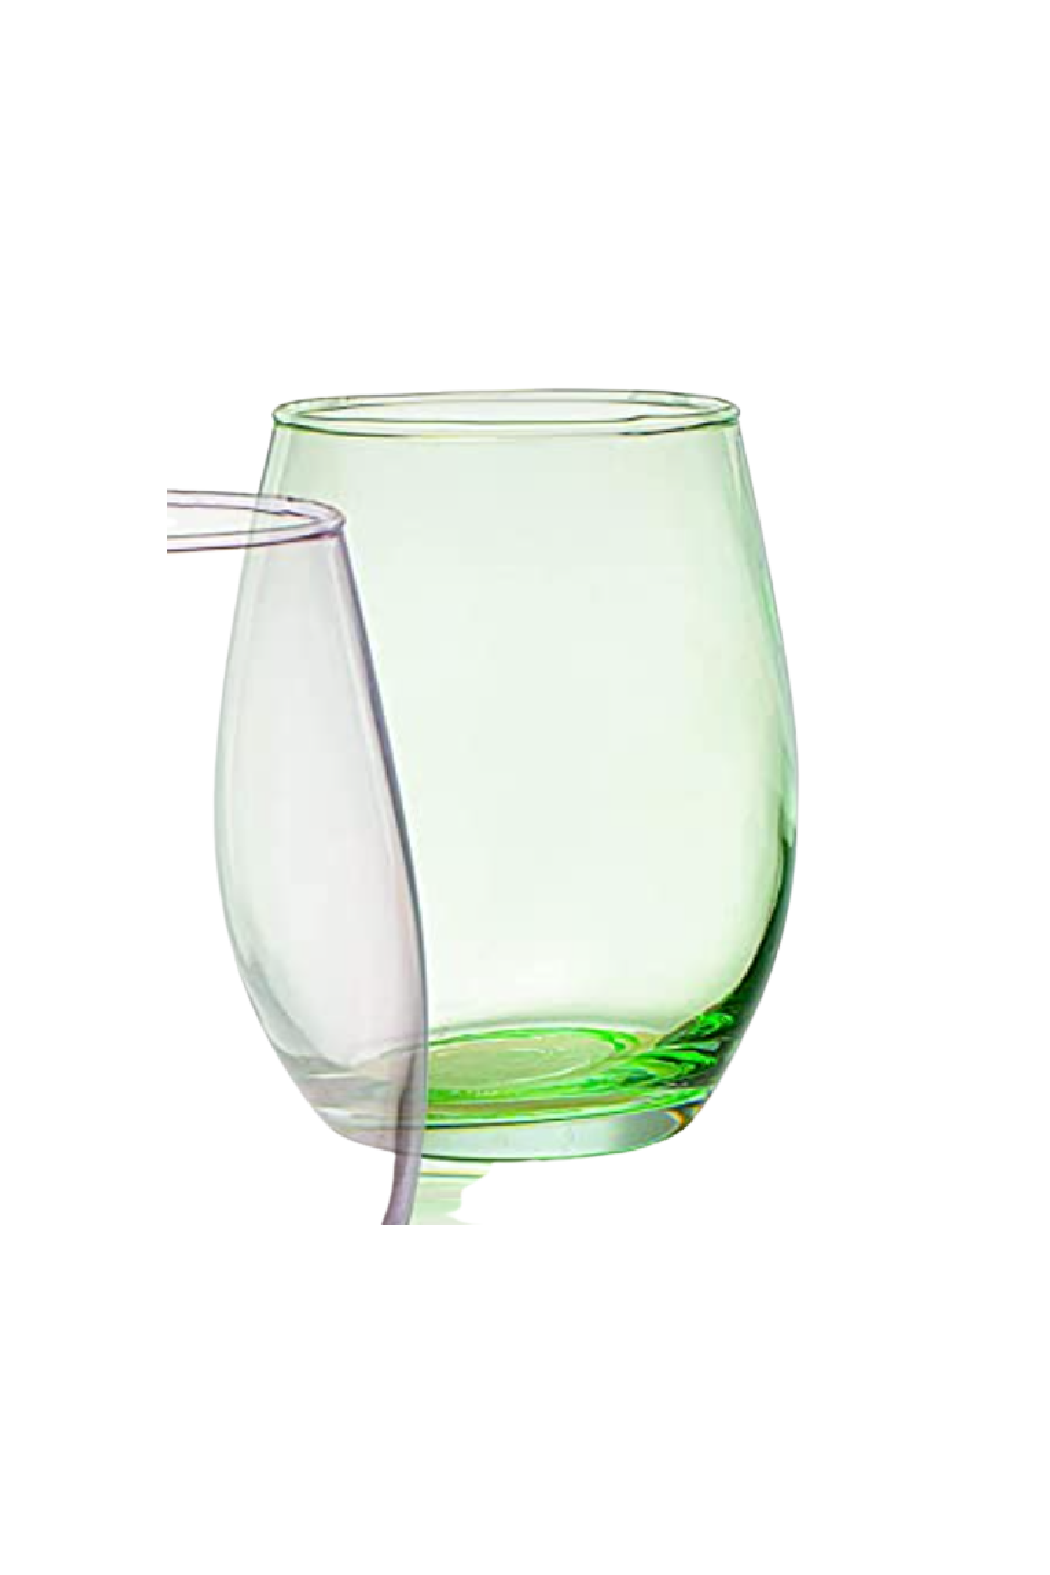 Blue Callie Stemless Wine Glasses, Set of 4